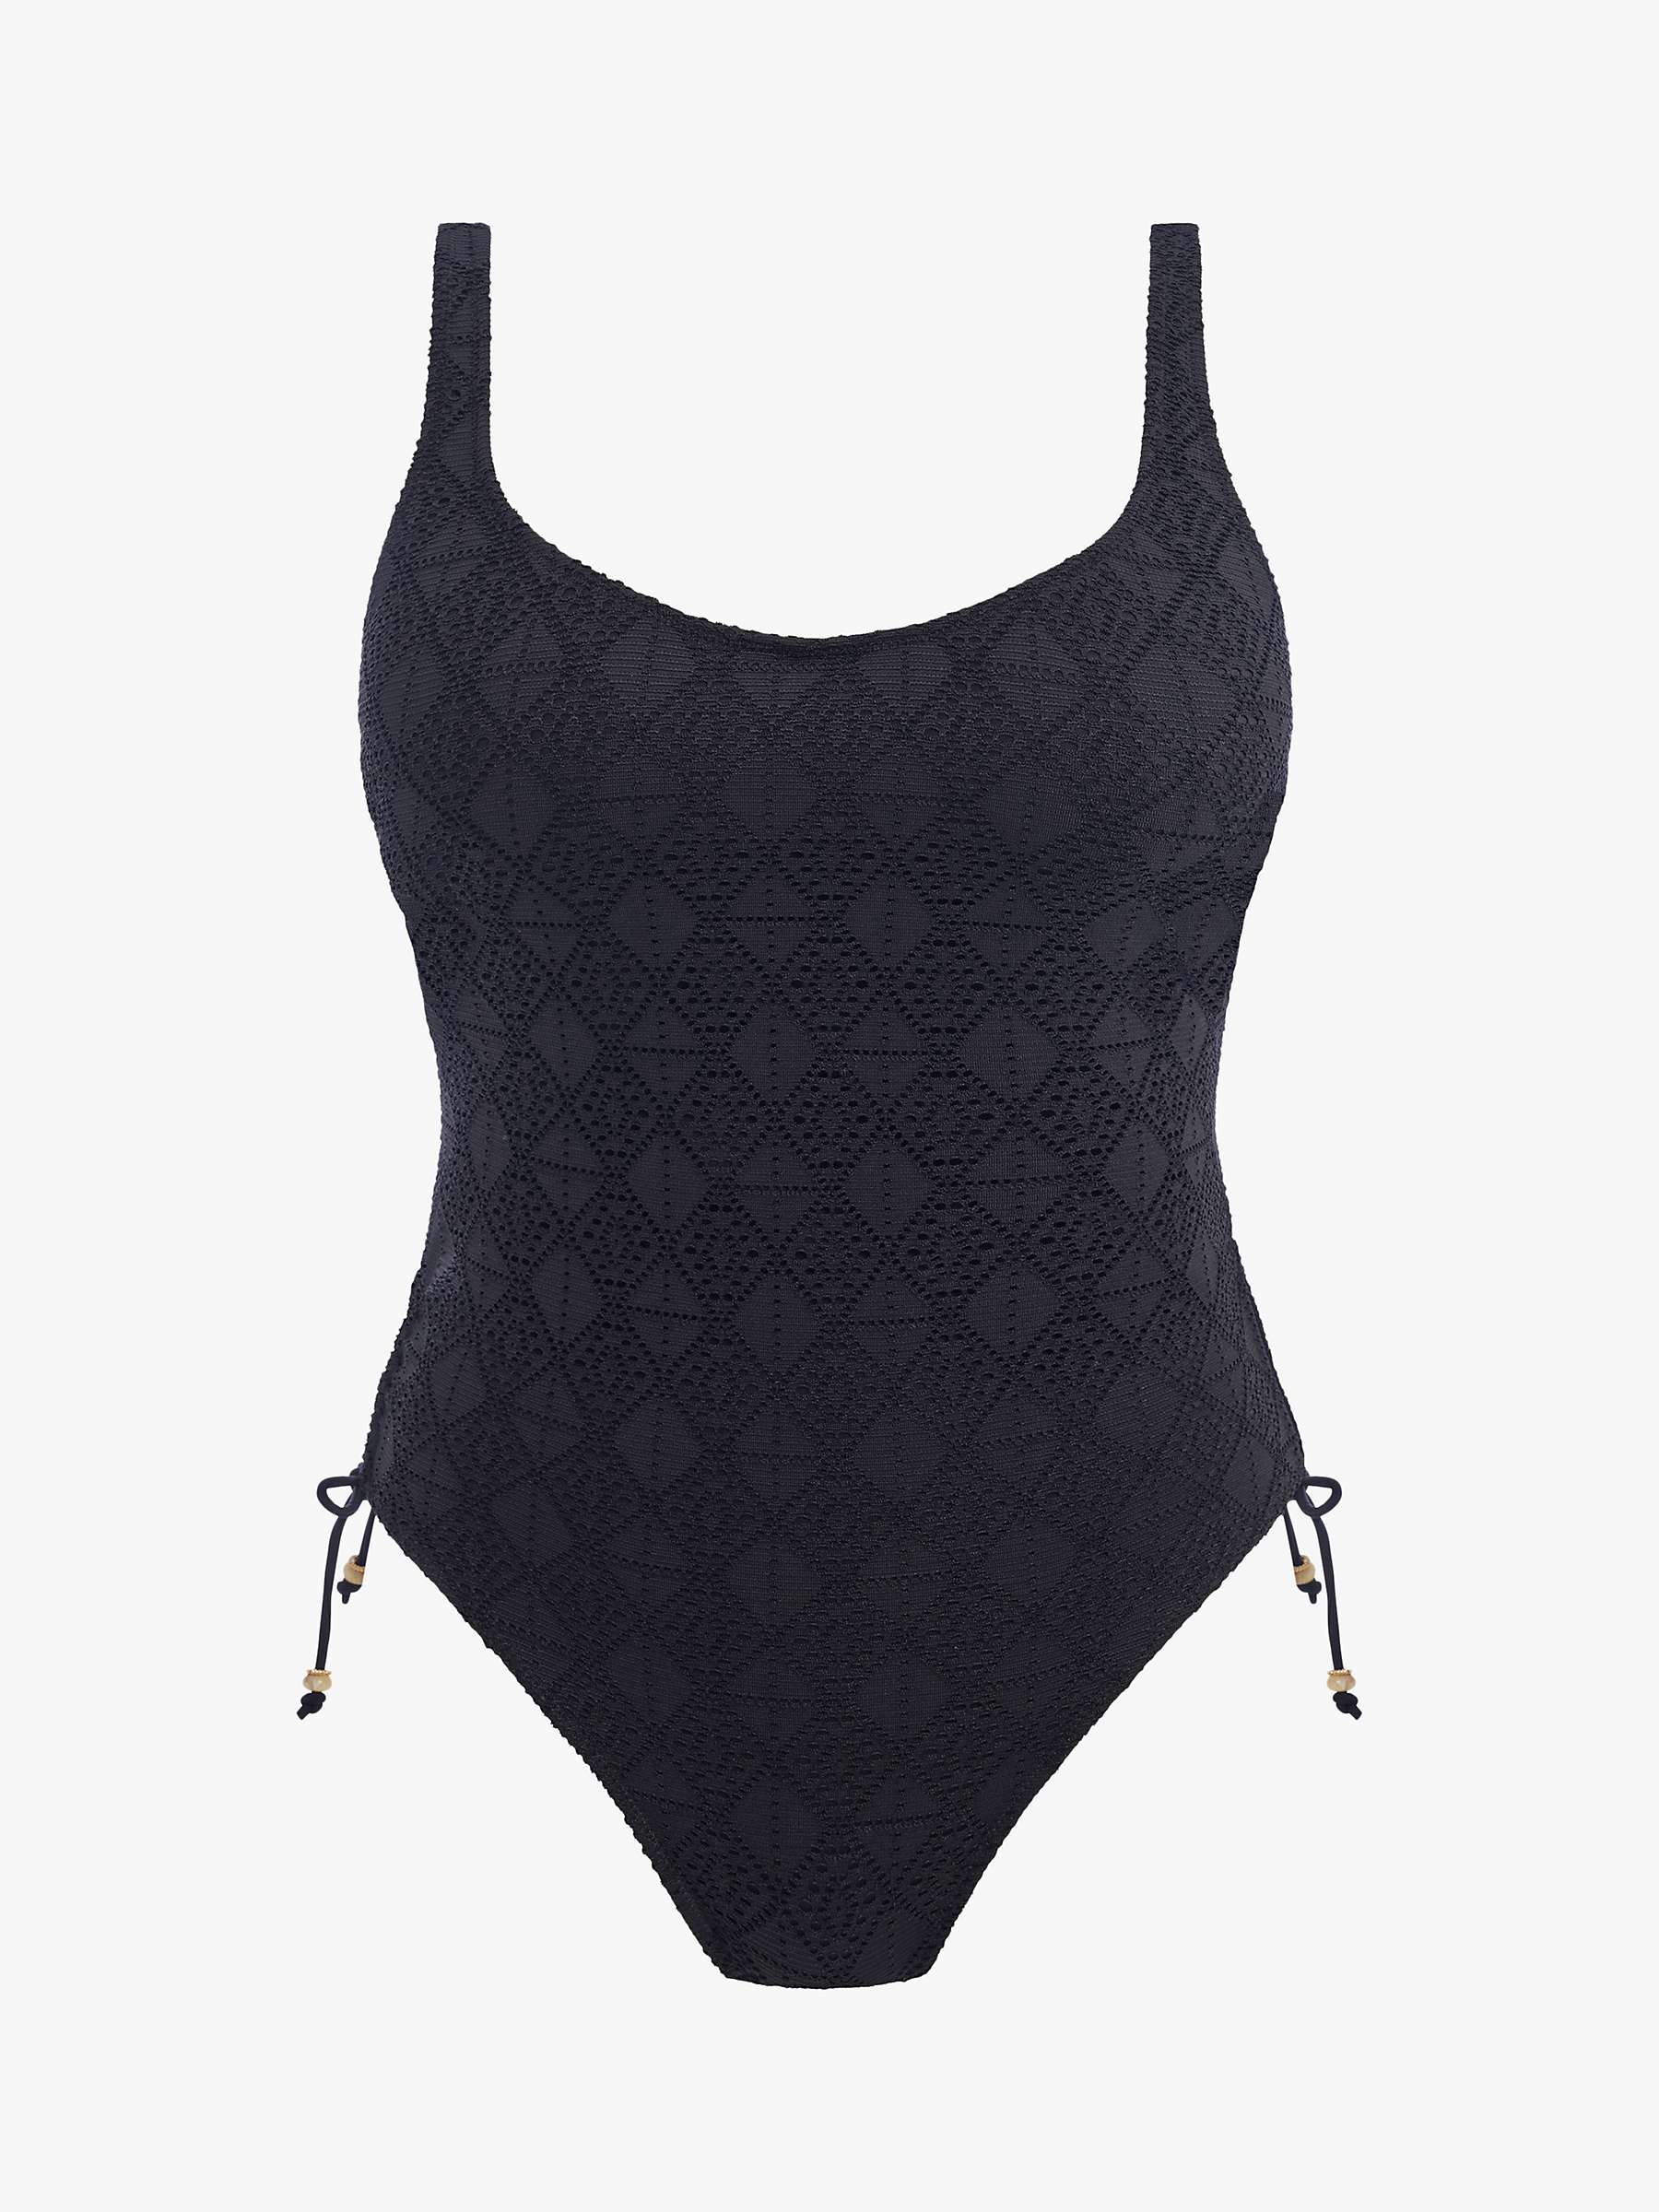 Buy Freya Nomad Nights Crochet Underwired Swimsuit, Black Online at johnlewis.com